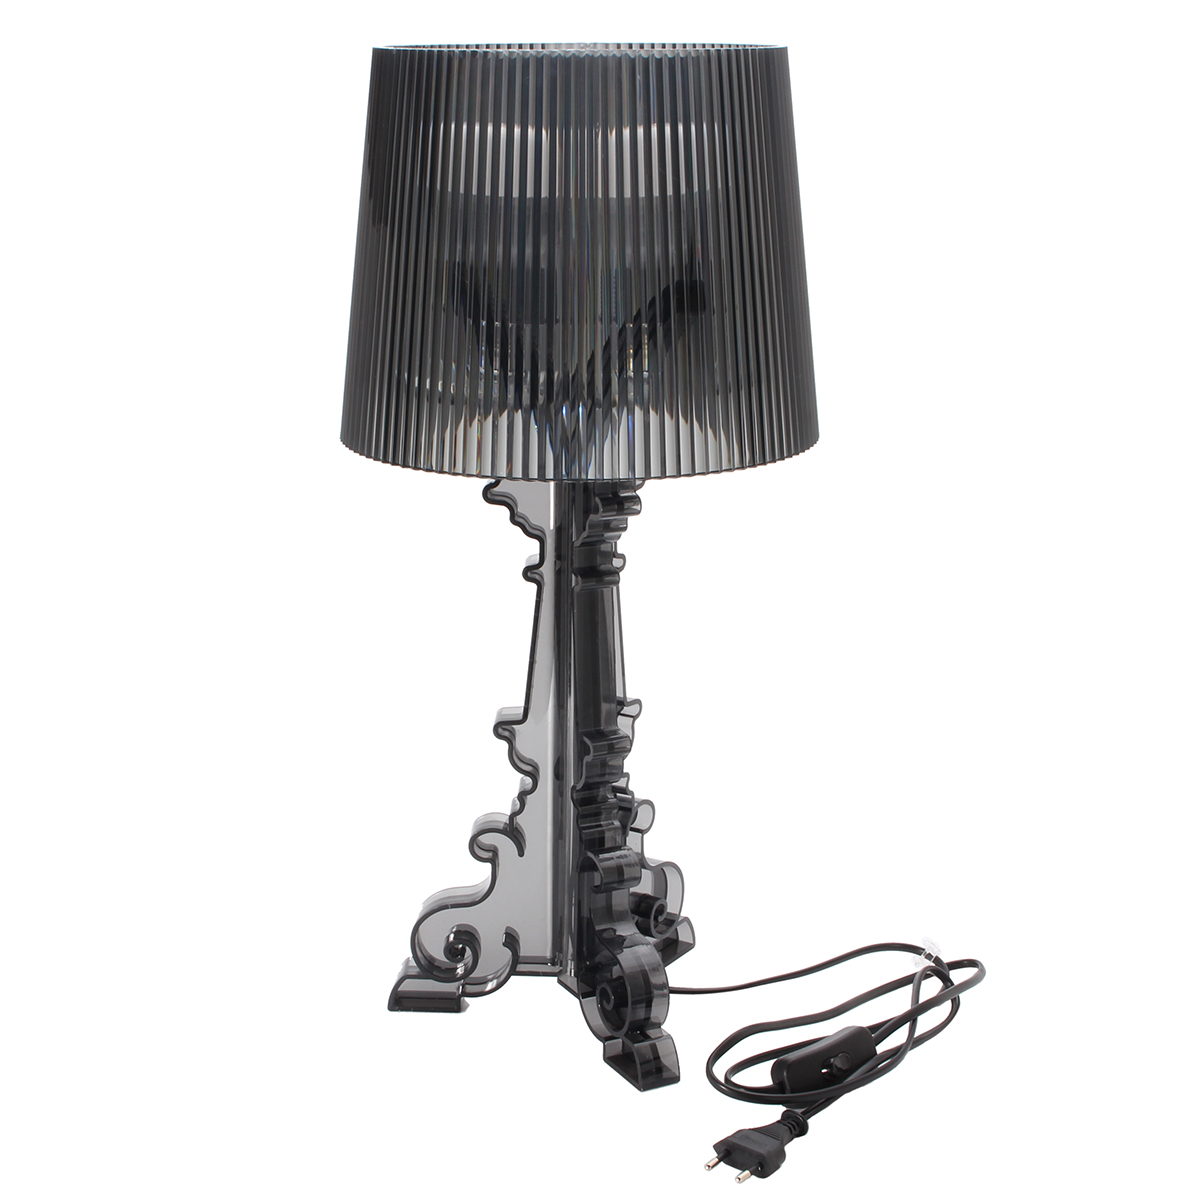 Table-lamp-Desk-Light-Lamp-for-Bedroom-Bedside-Night-Light-Solid-Creative-Birthday-Gift-Night-Light--1745842-10